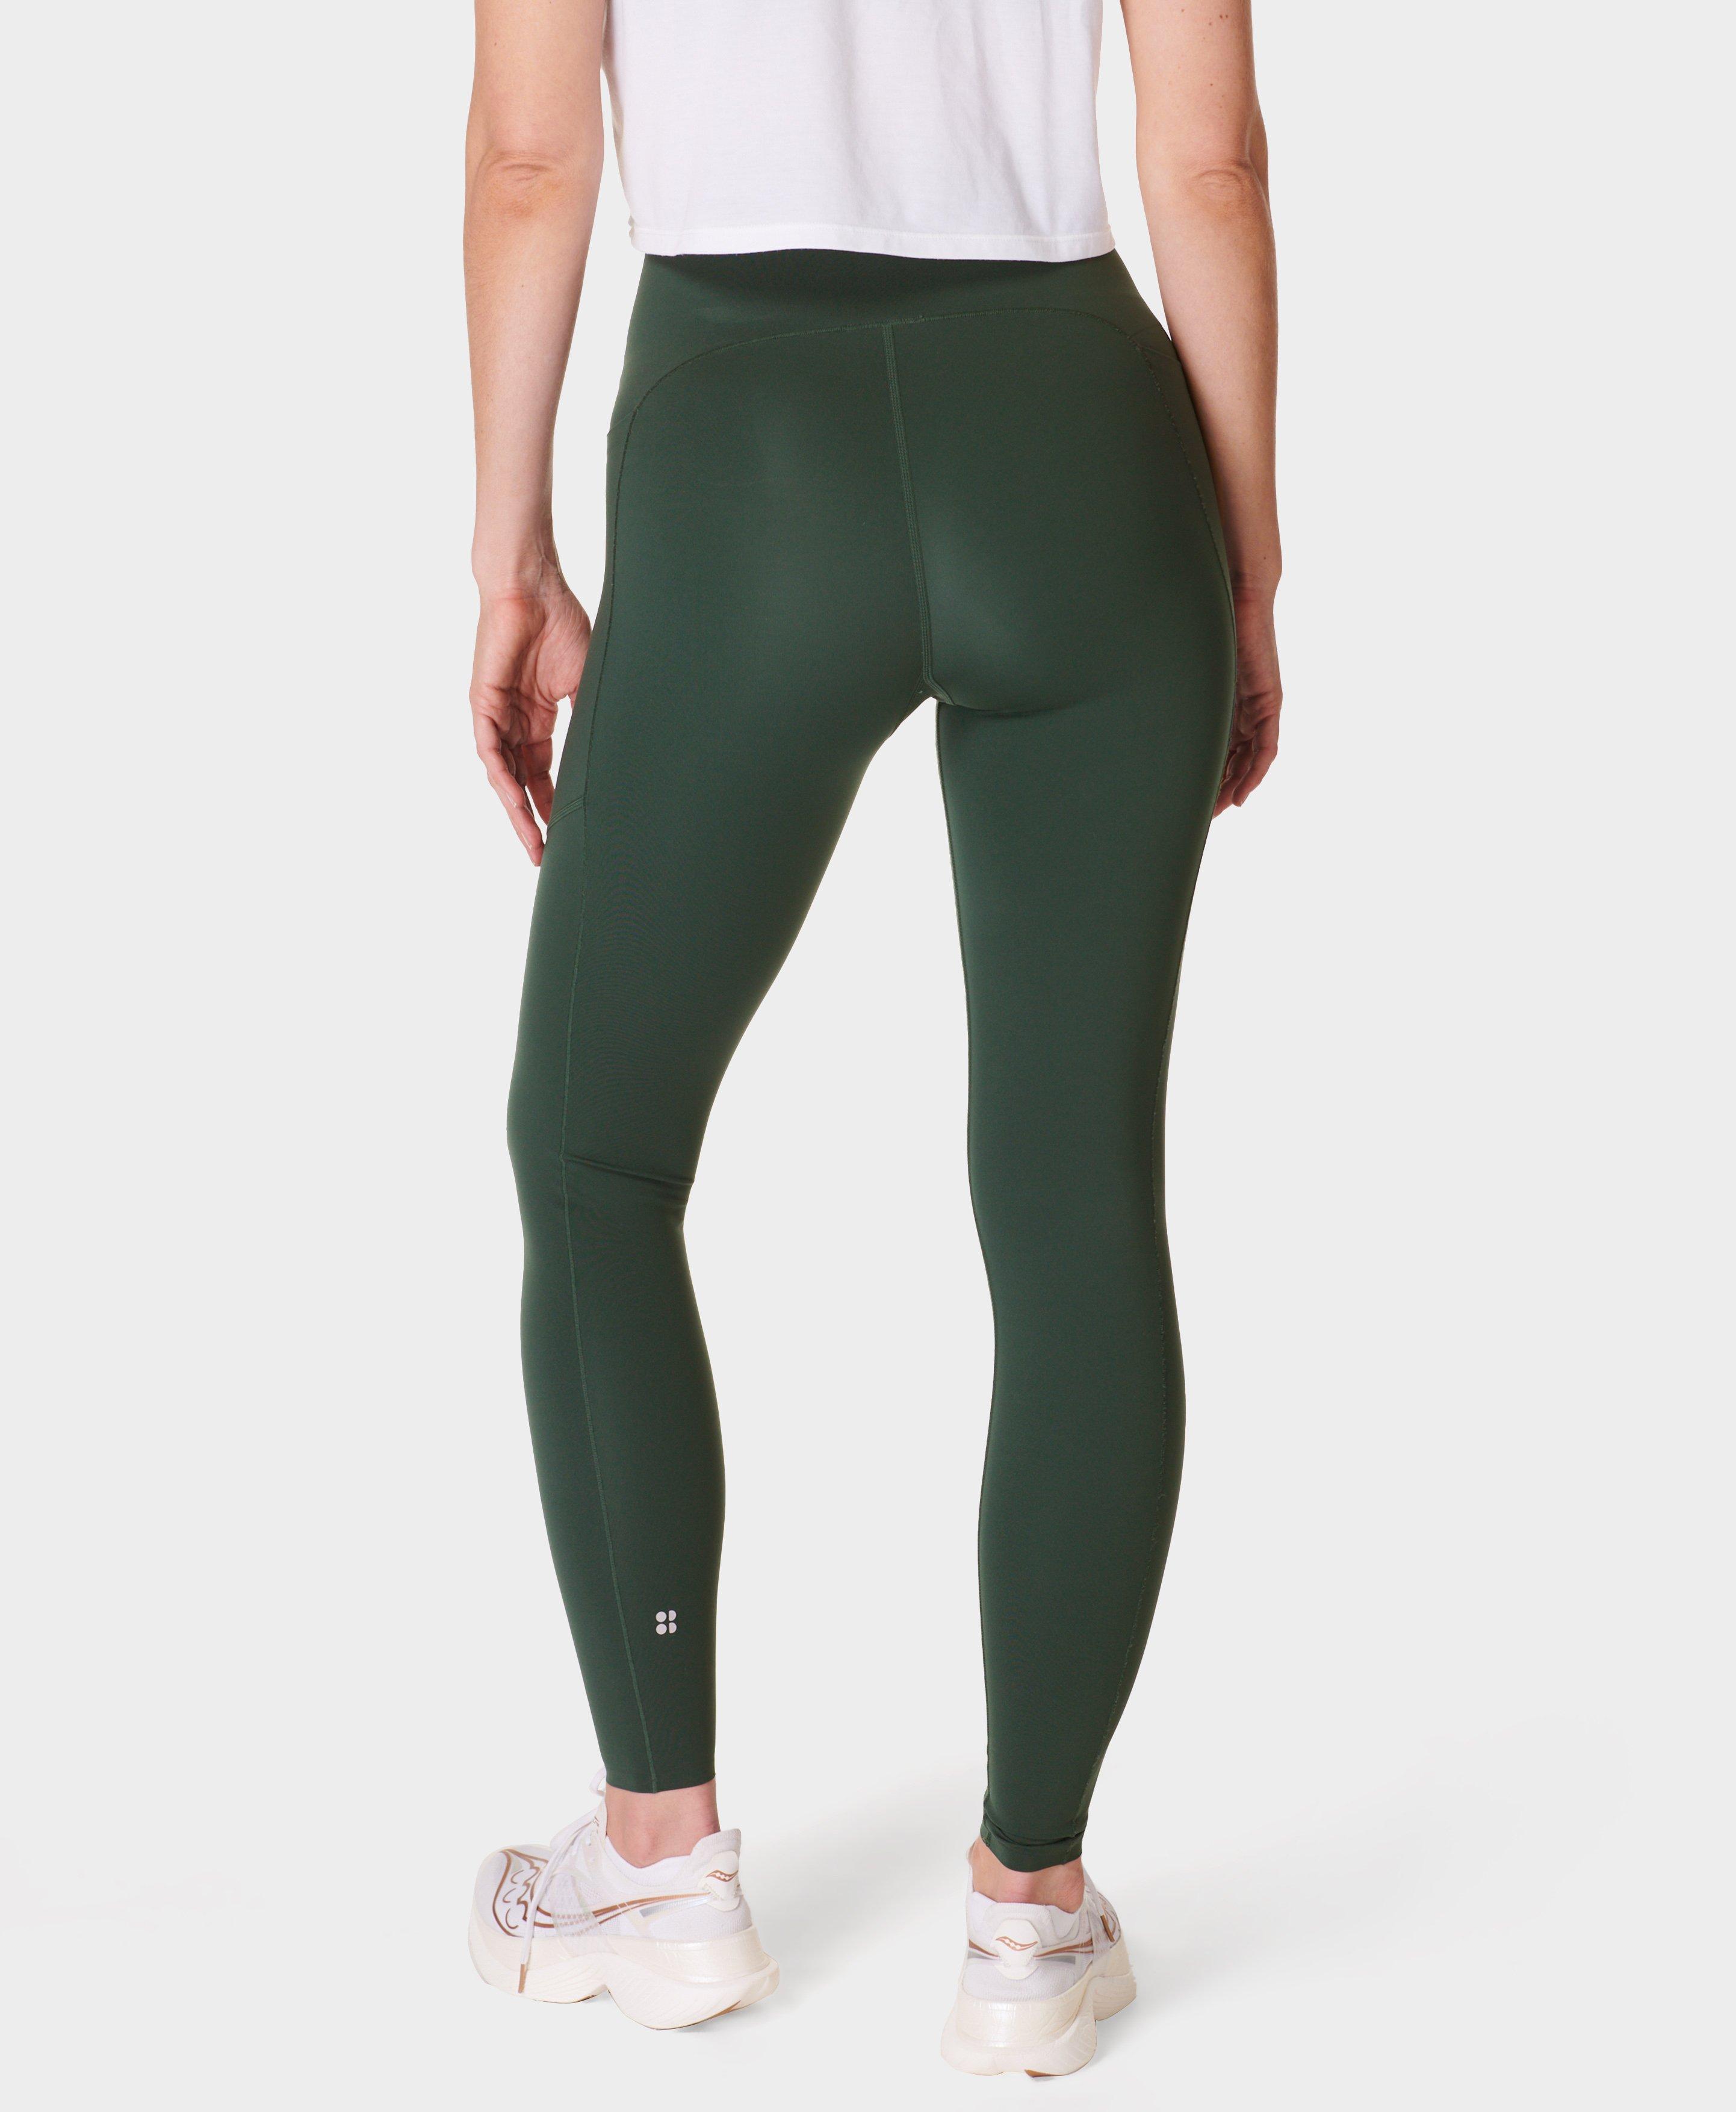 Rock Paper Scissors Premium Gym wear/Active Wear Tights Strechable Leggings  Yoga Pants Gym Tight Geometric Green